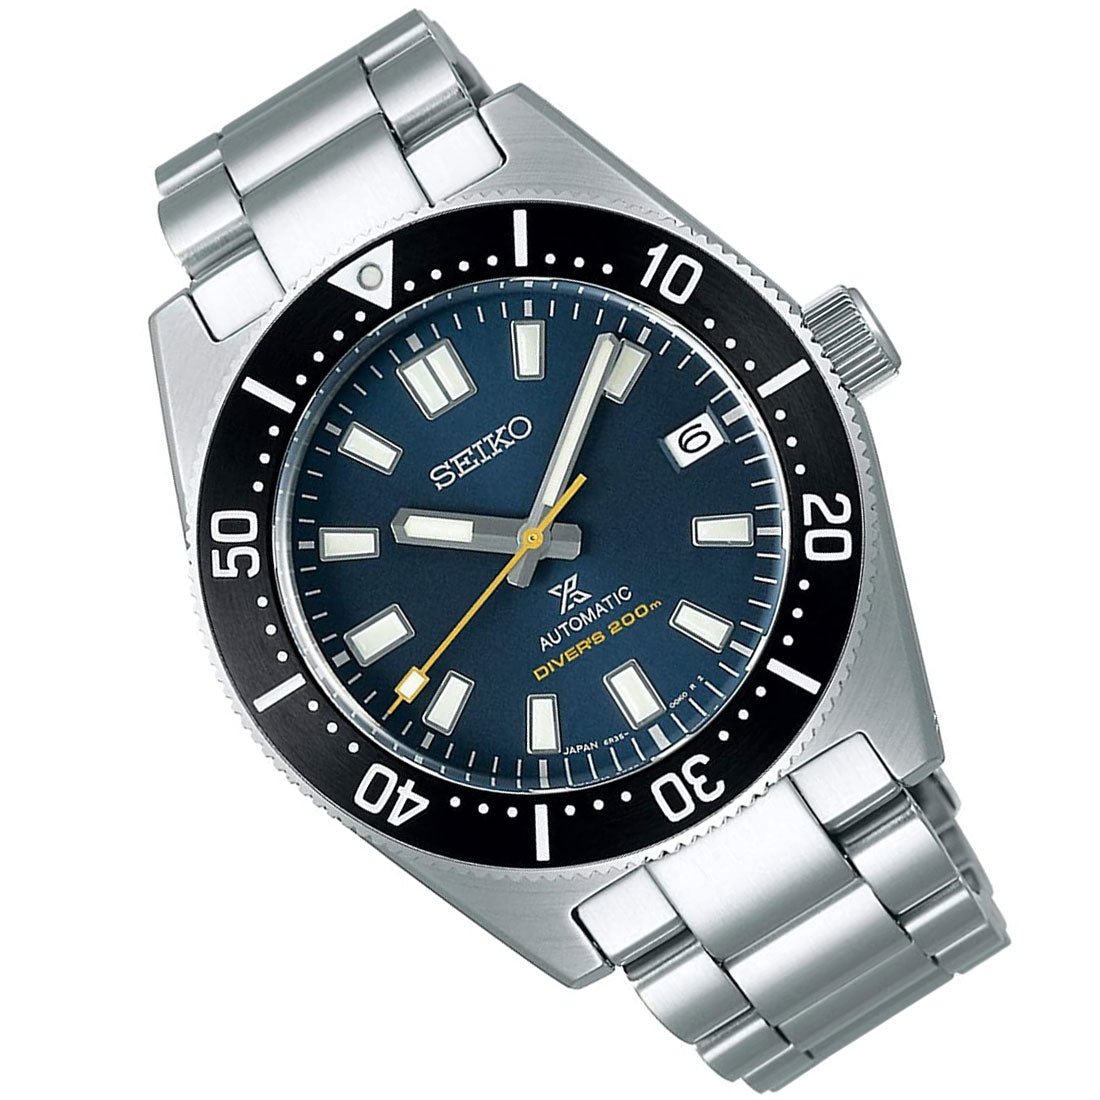 Seiko Divers 55th Anniversary Prospex Limited Edition JDM Watch SBDC107 -Seiko